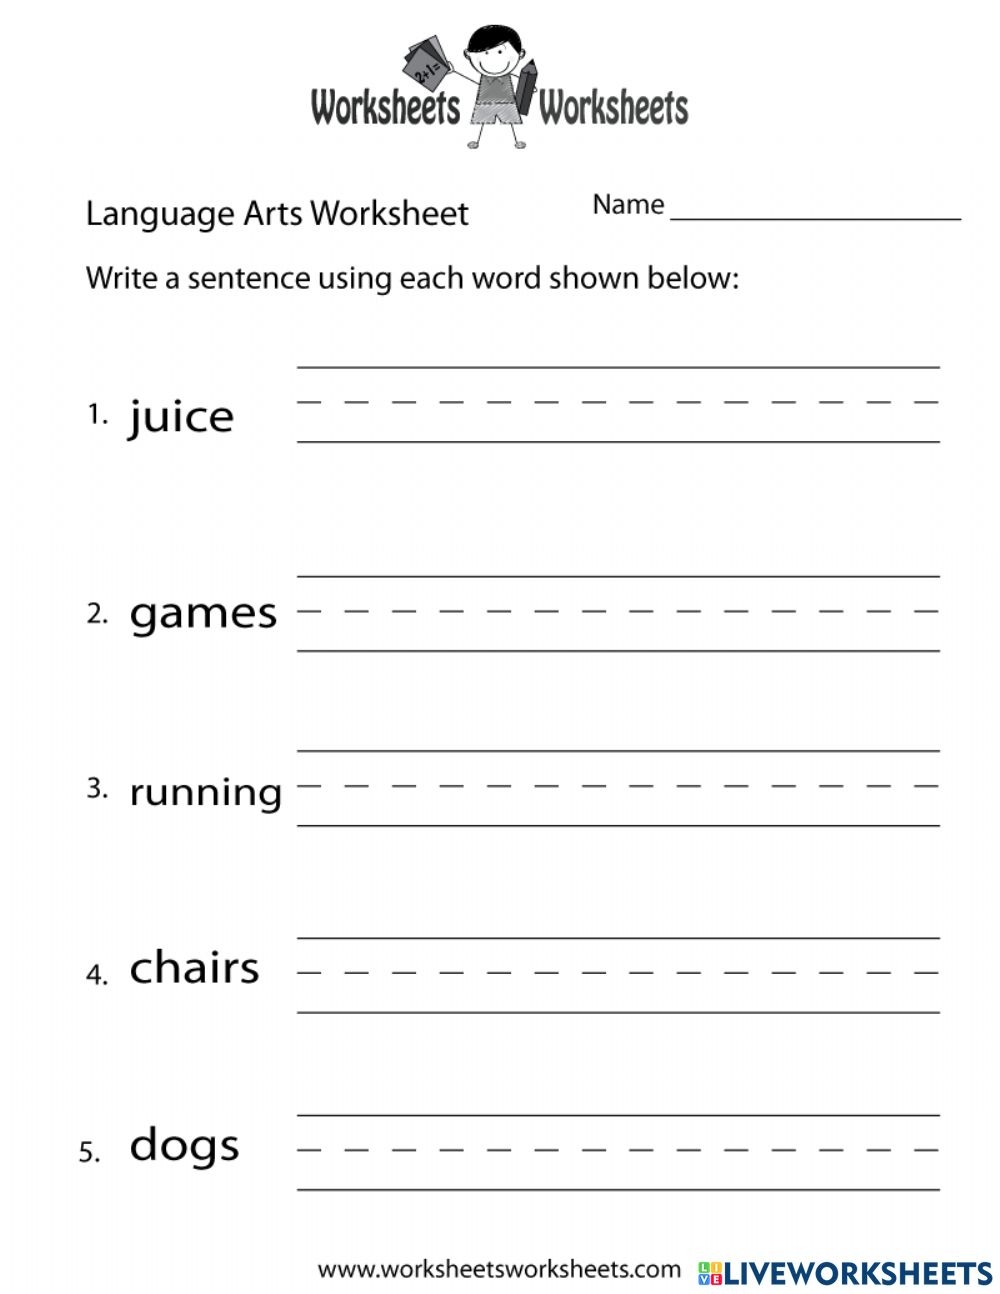 Practice Writing Sentences Worksheets - Printable Worksheets